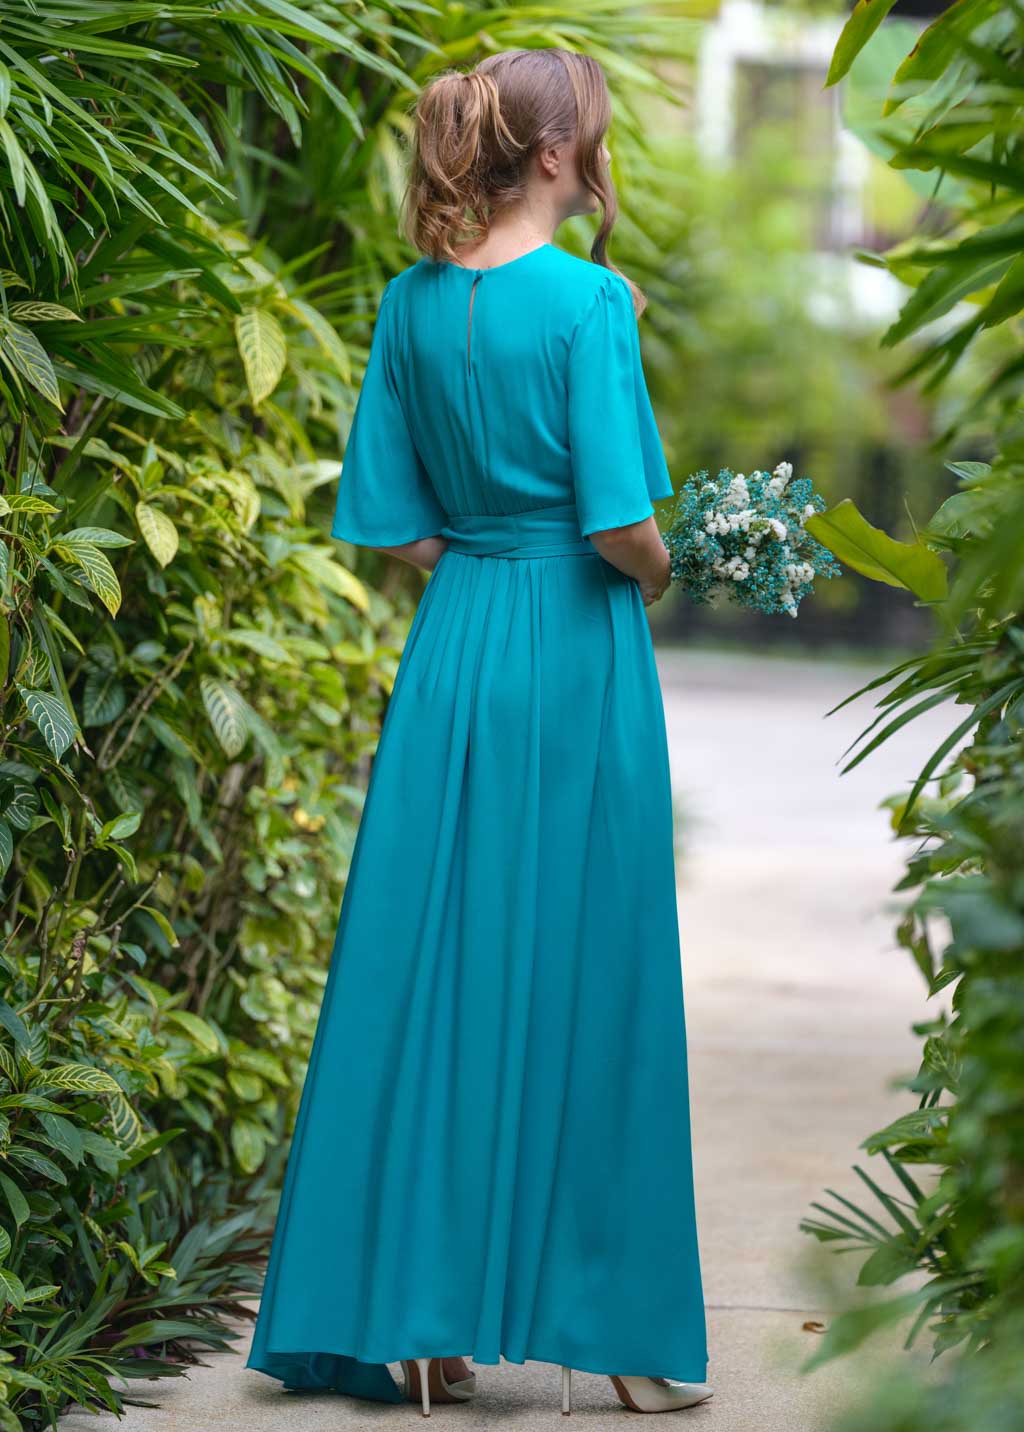 Turquoise slit dress with belt